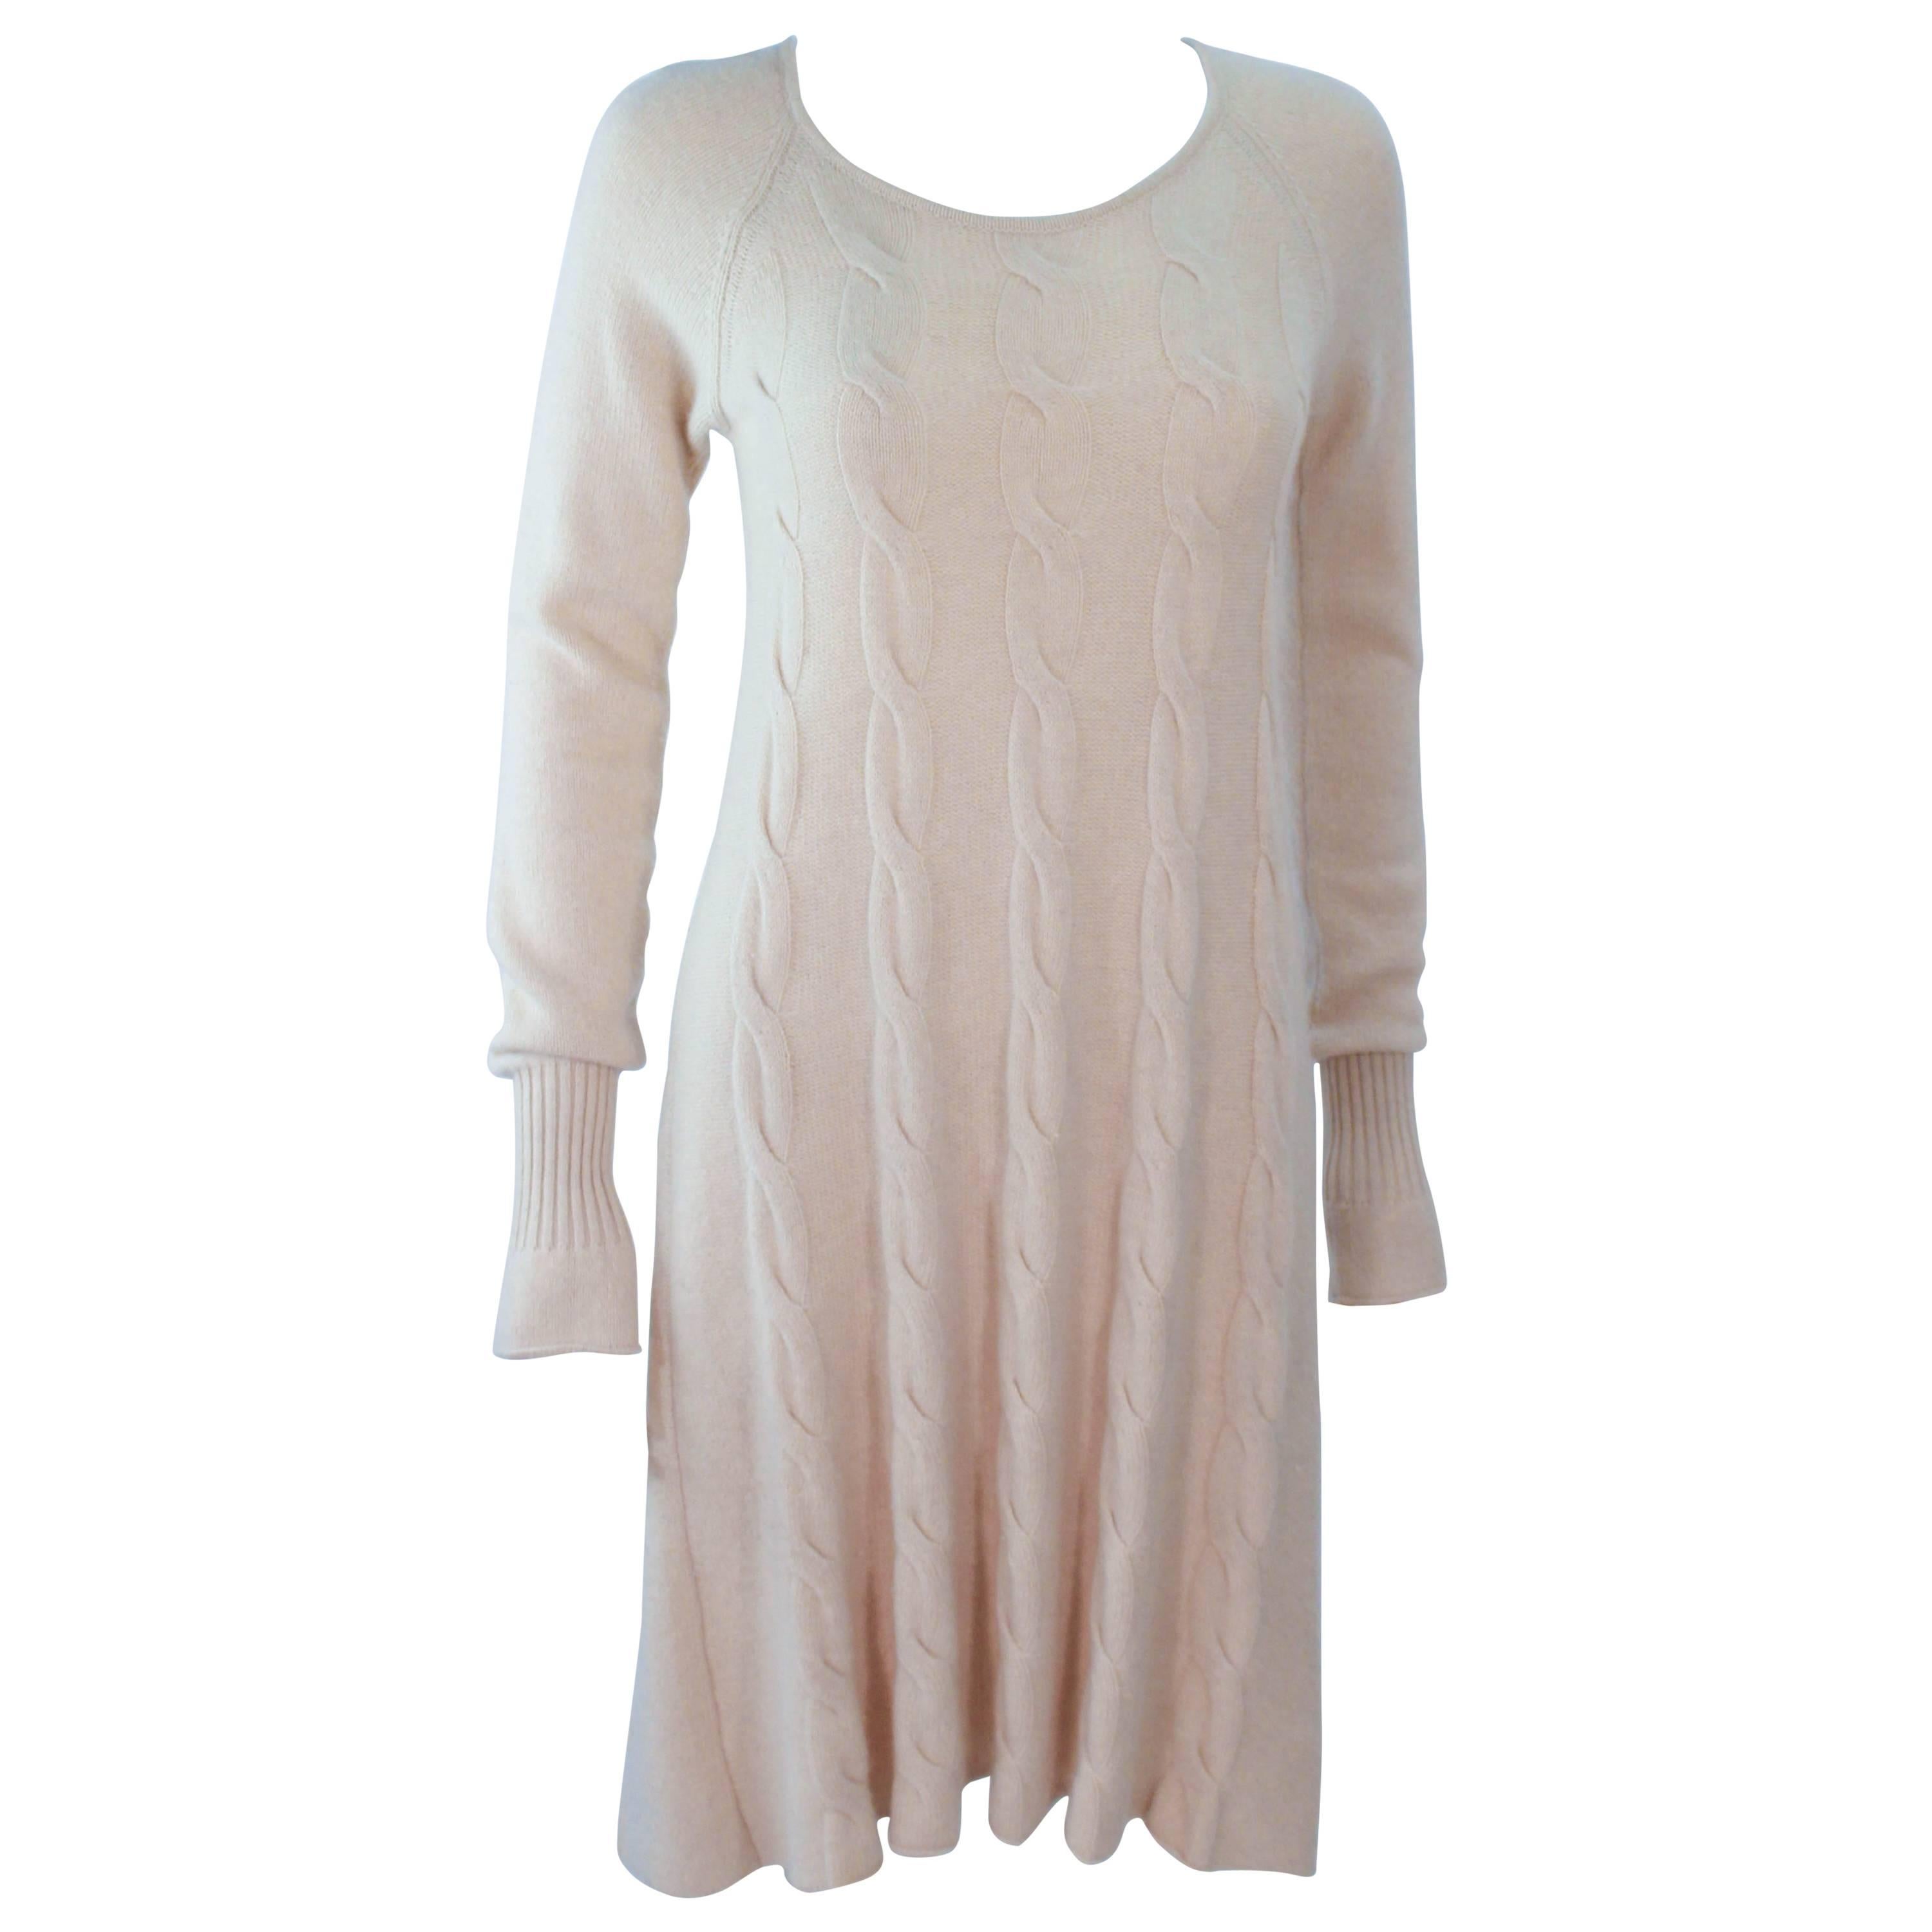 KRIZIA Cream Cashmere Knit Dress Size 42 For Sale